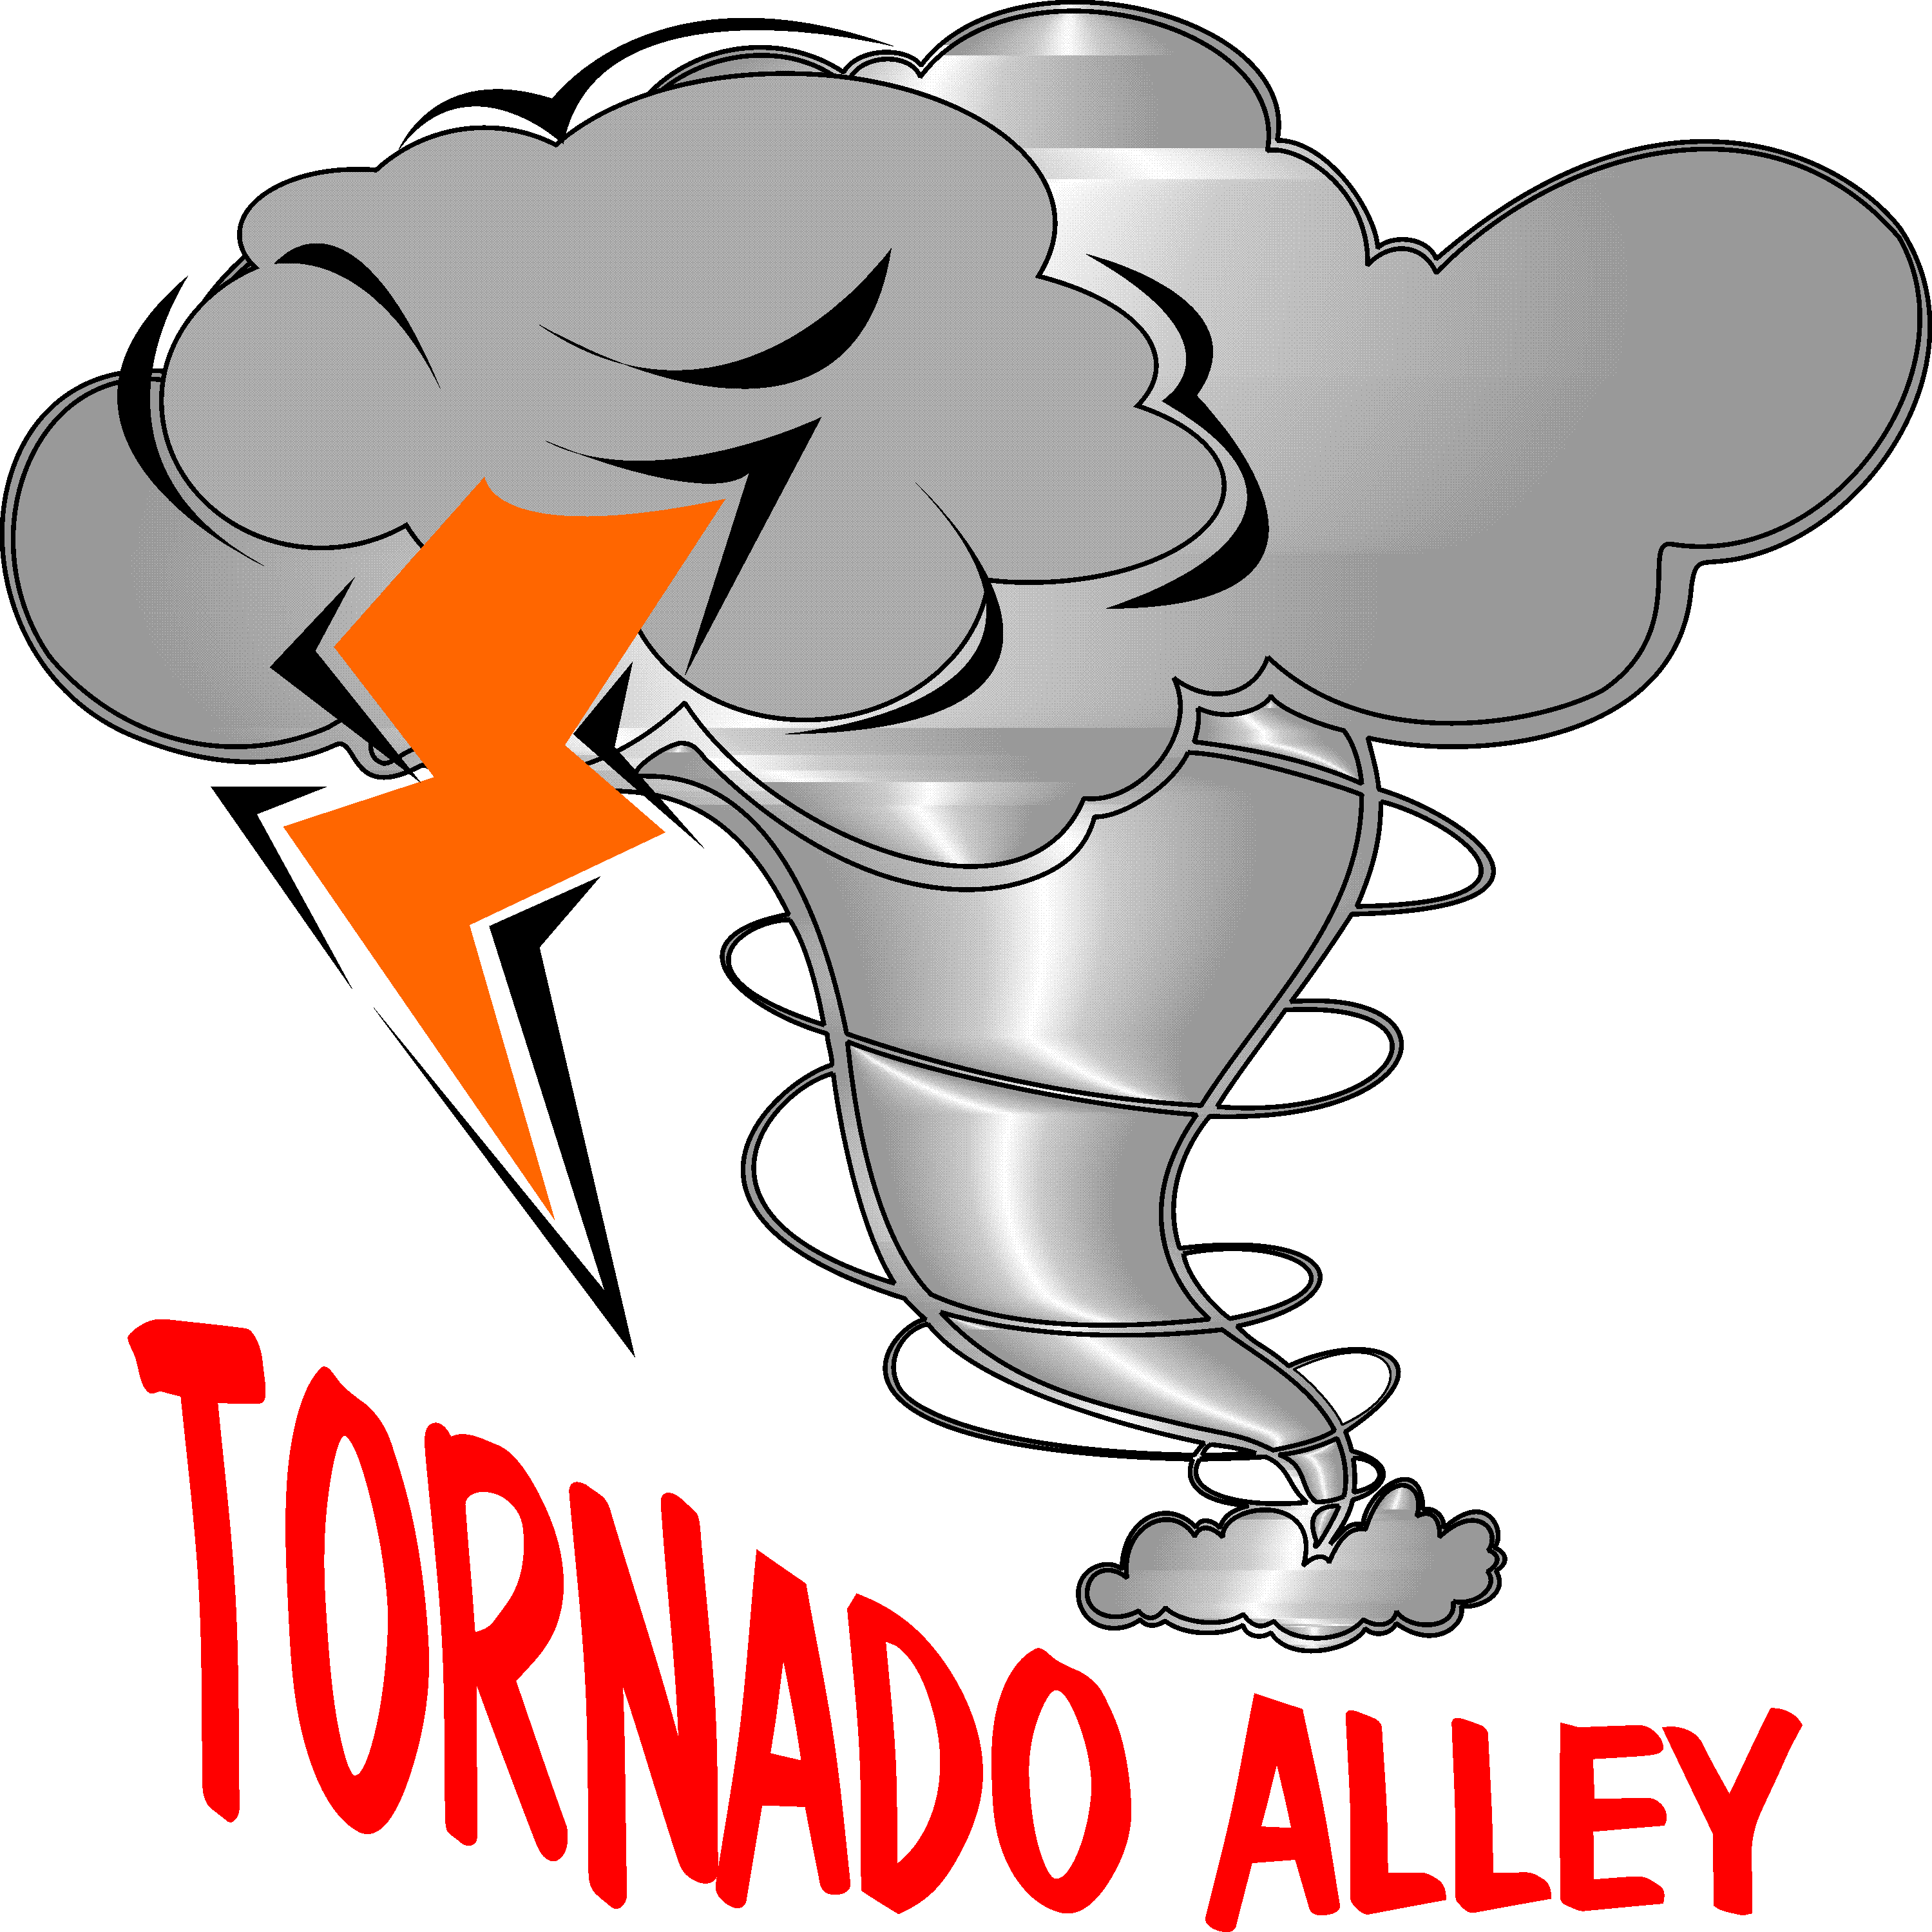 Tornado_alley_gif.gif